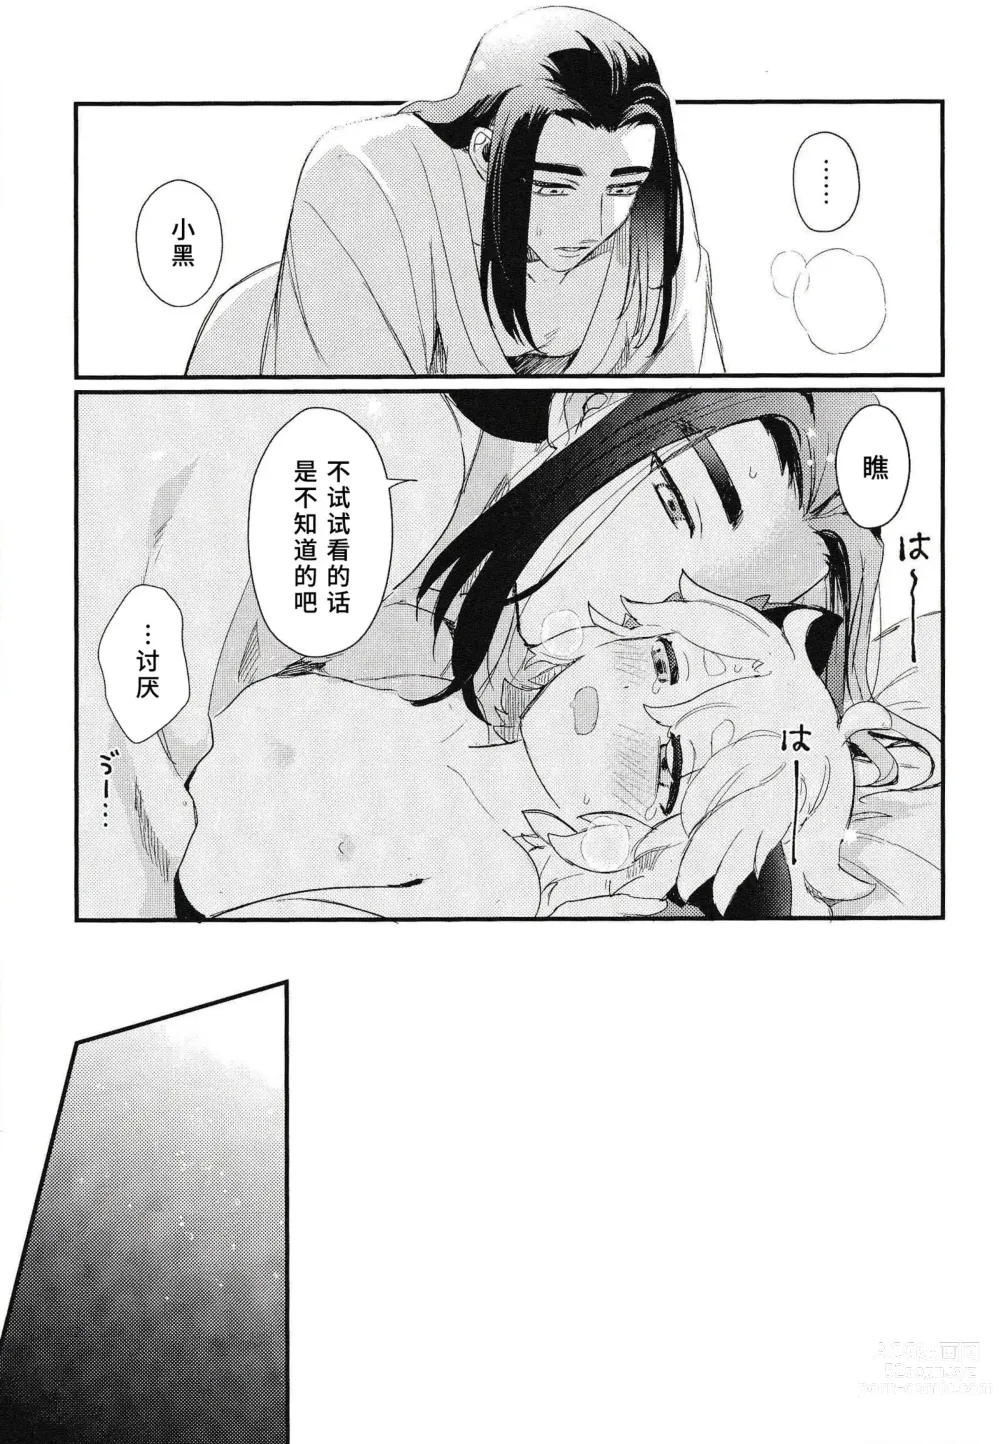 Page 17 of doujinshi 互相依偎她身体